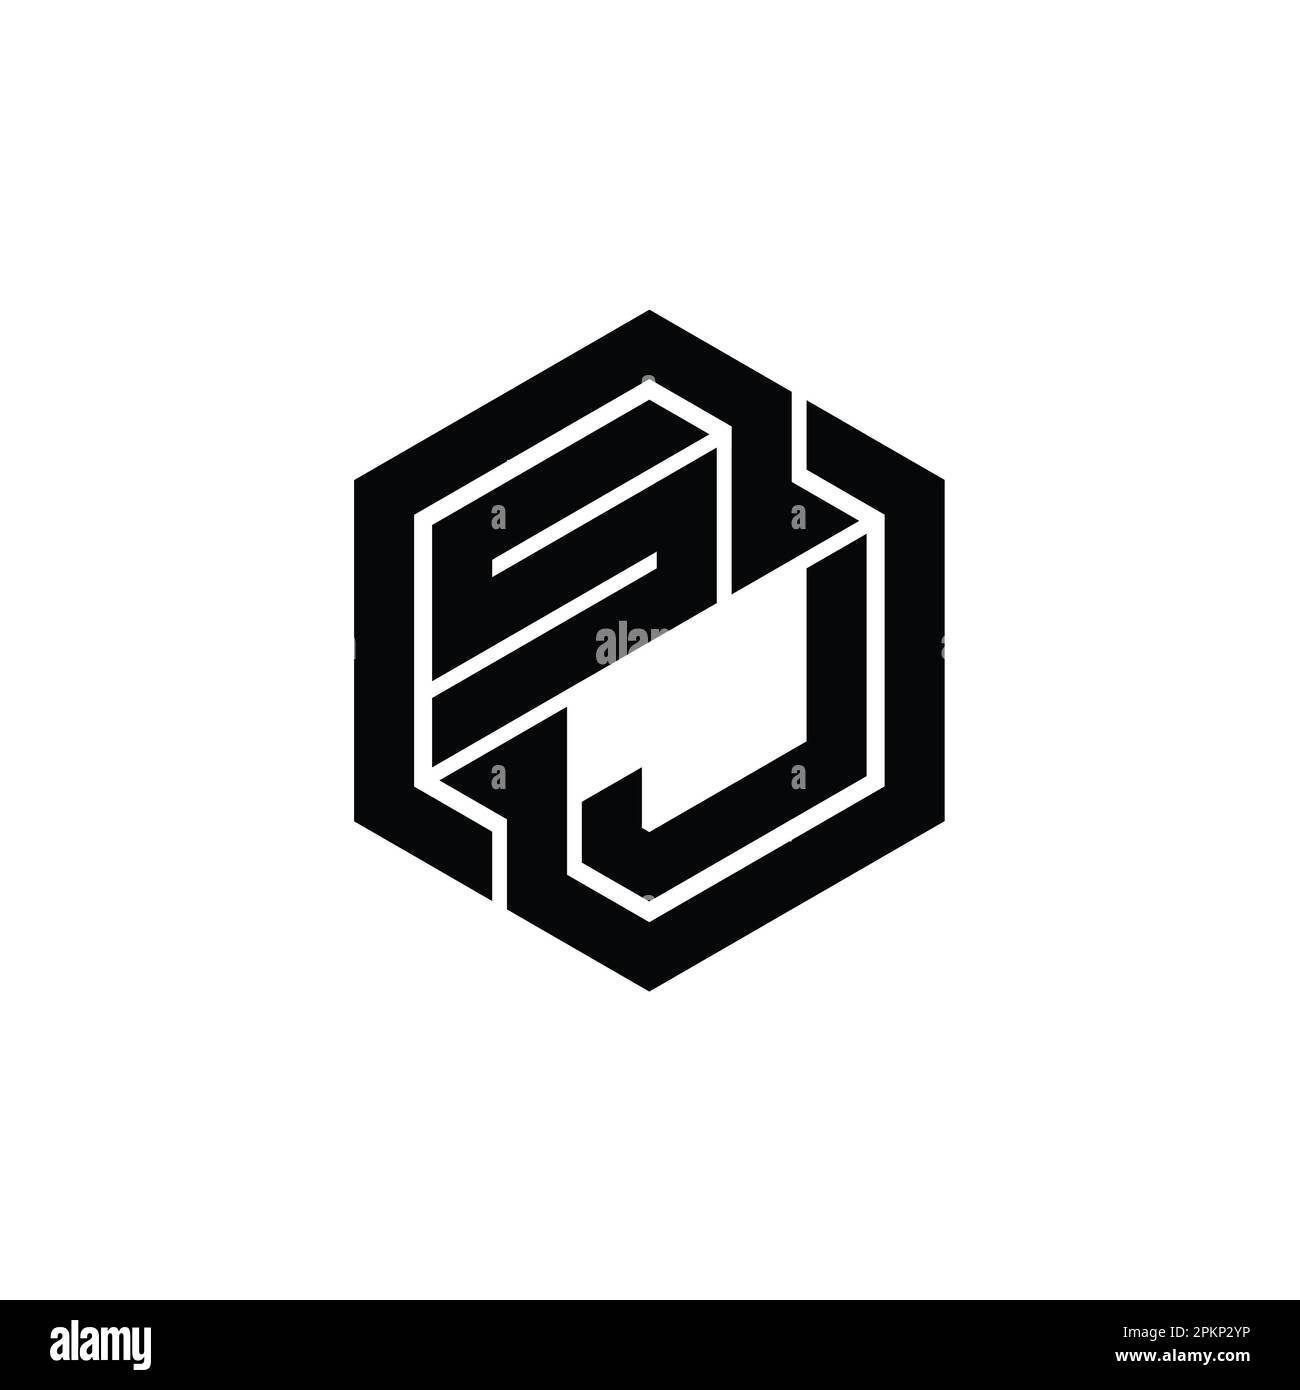 SJ Logo monogram gaming with hexagon geometric shape design template Stock Photo